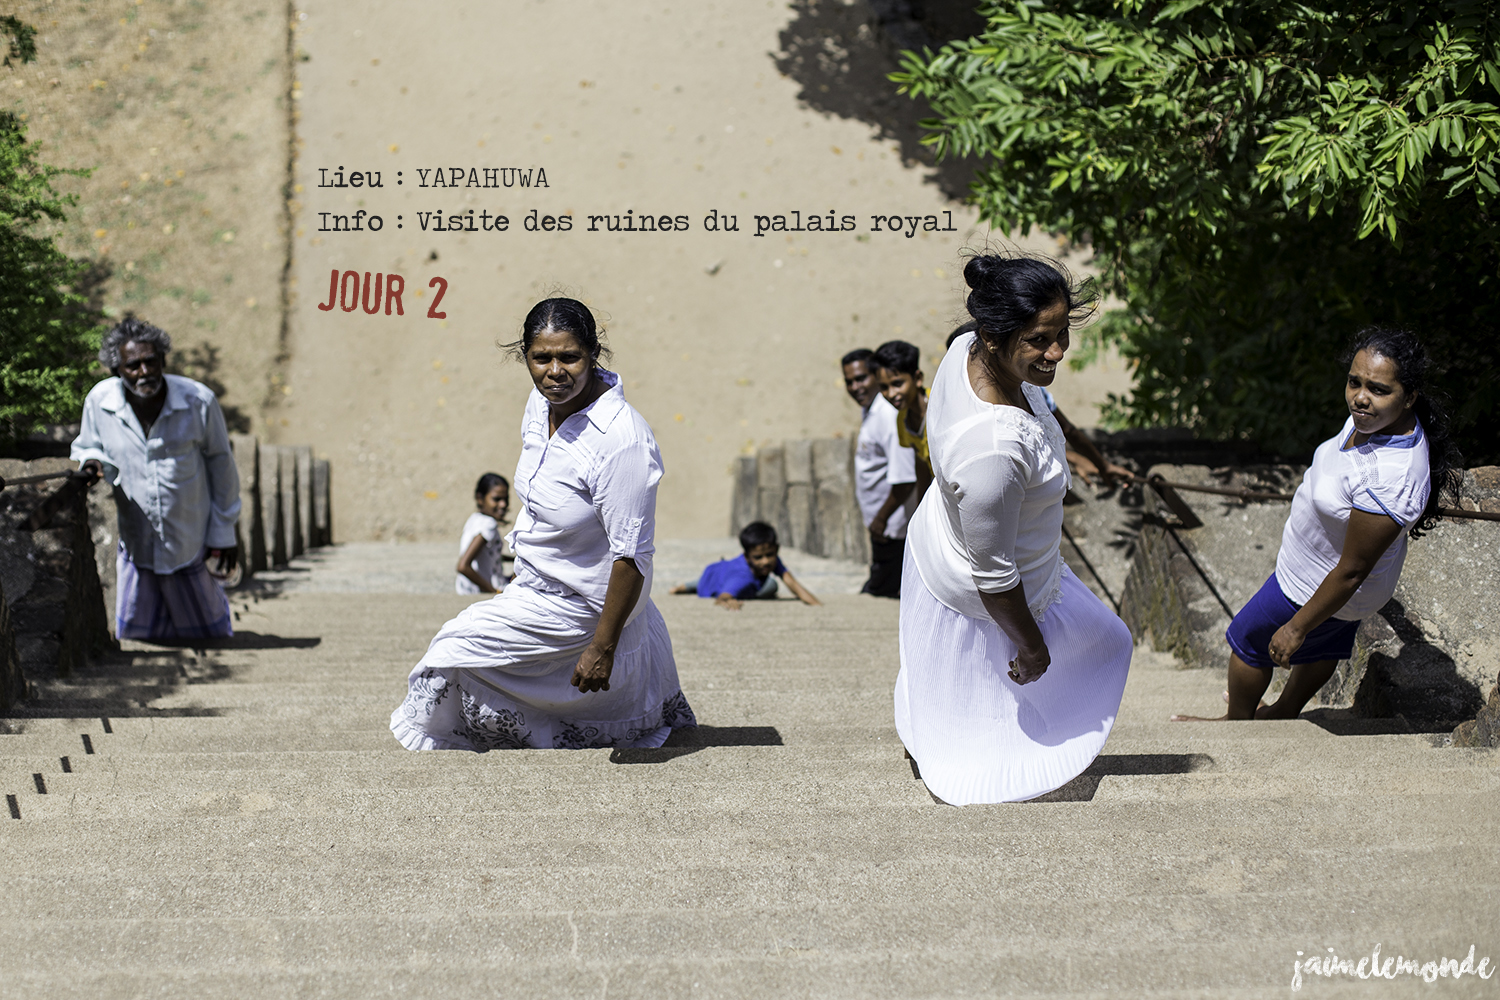 Voyage Sri Lanka - Itinéraire Jour 2 - 6 Yapahuwa - Visite des ruines - ©jaimelemonde